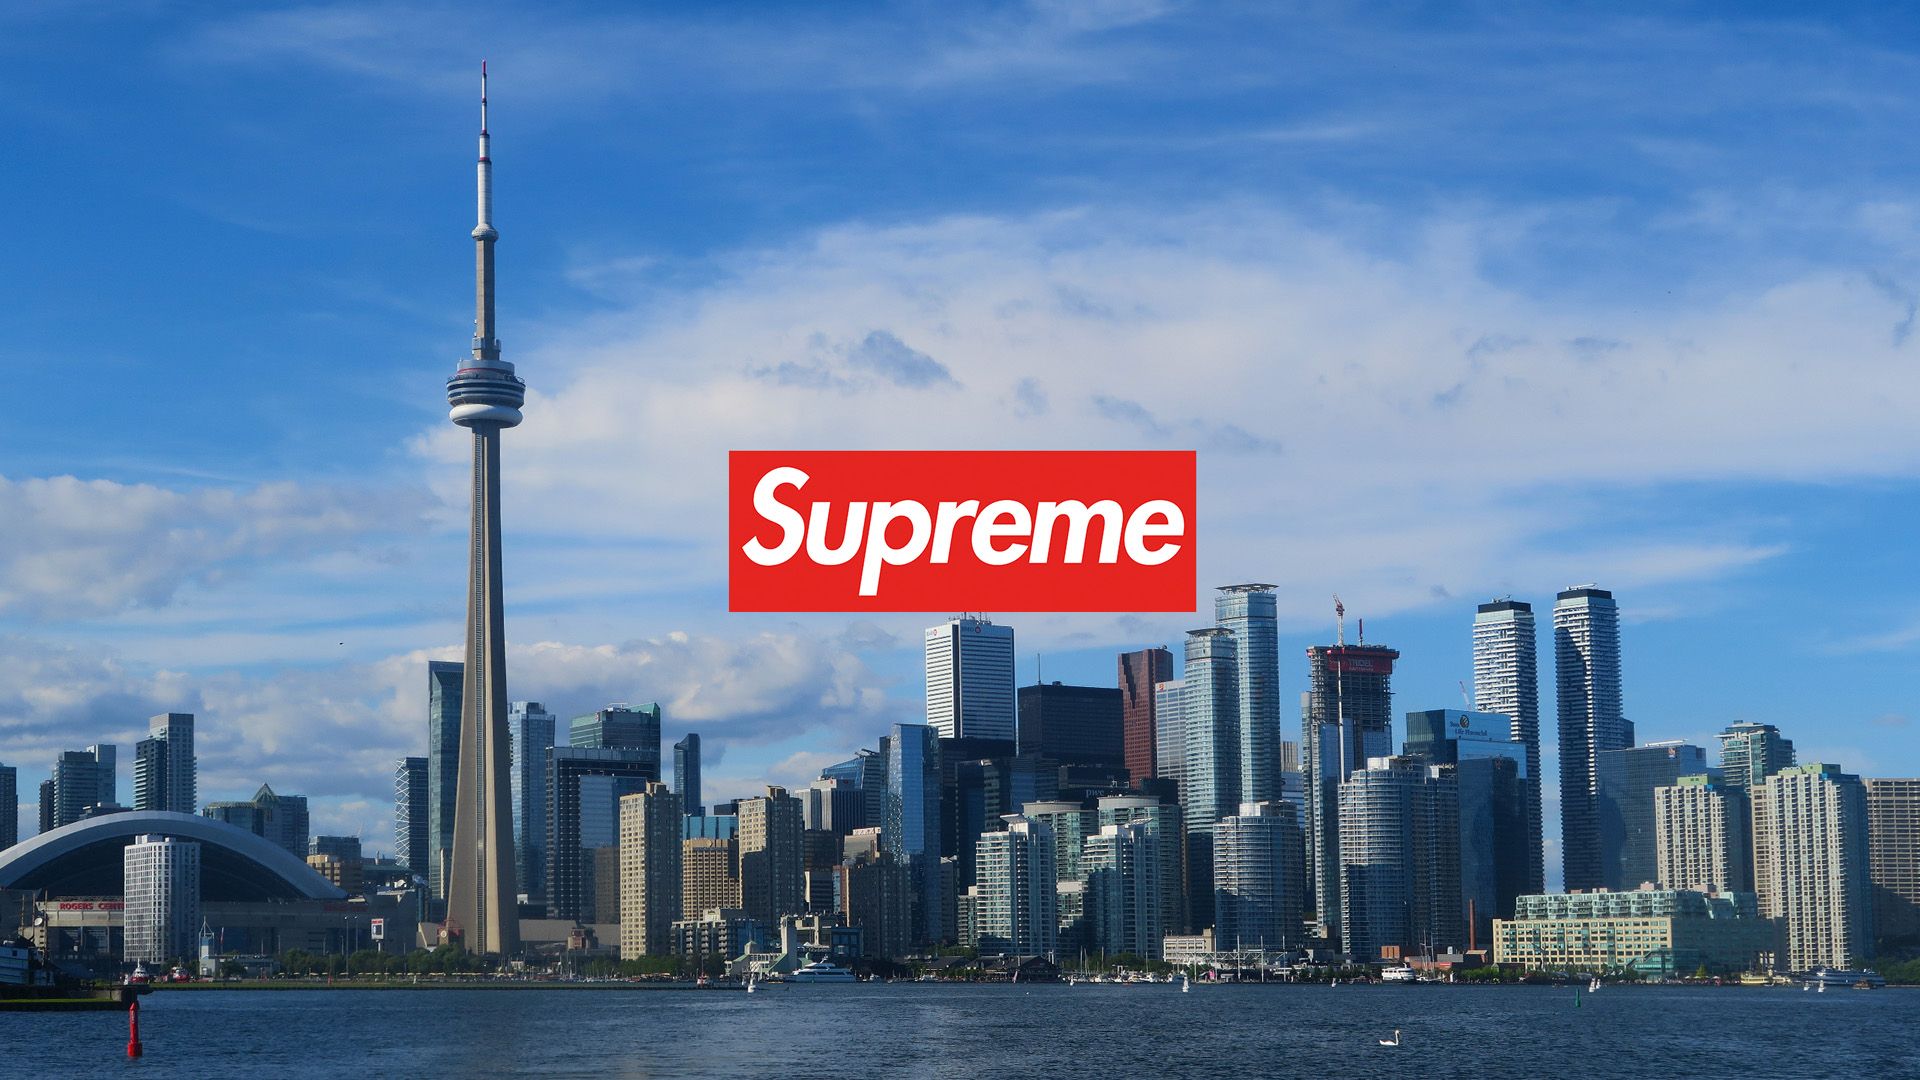 Supreme Toronto Wallpaper